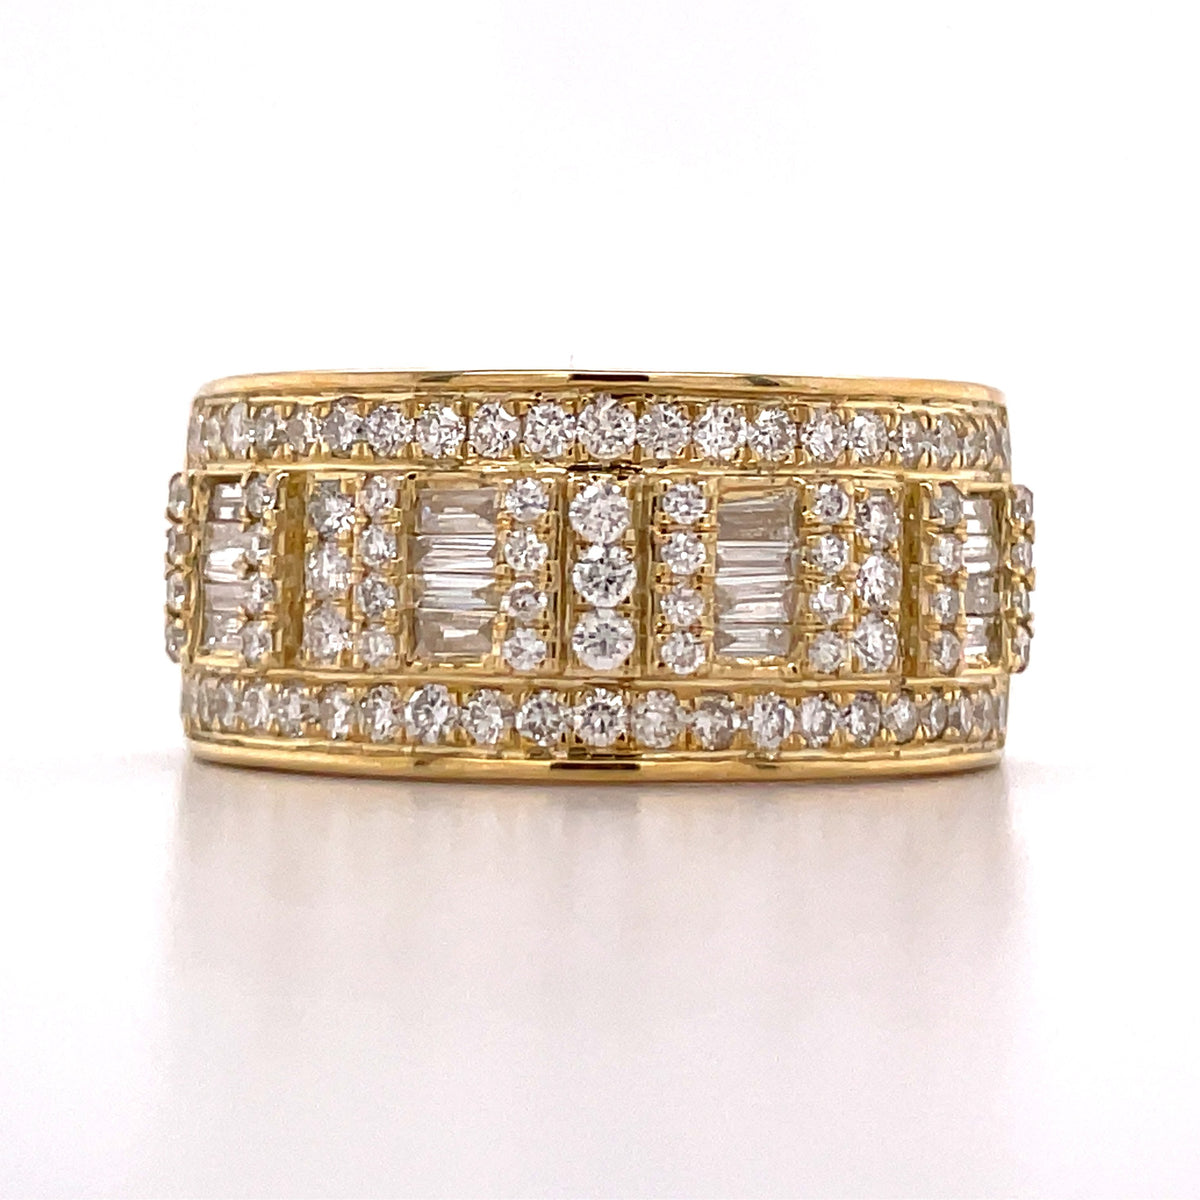 1.38 CT. Diamond Ring in Gold - White Carat - USA & Canada